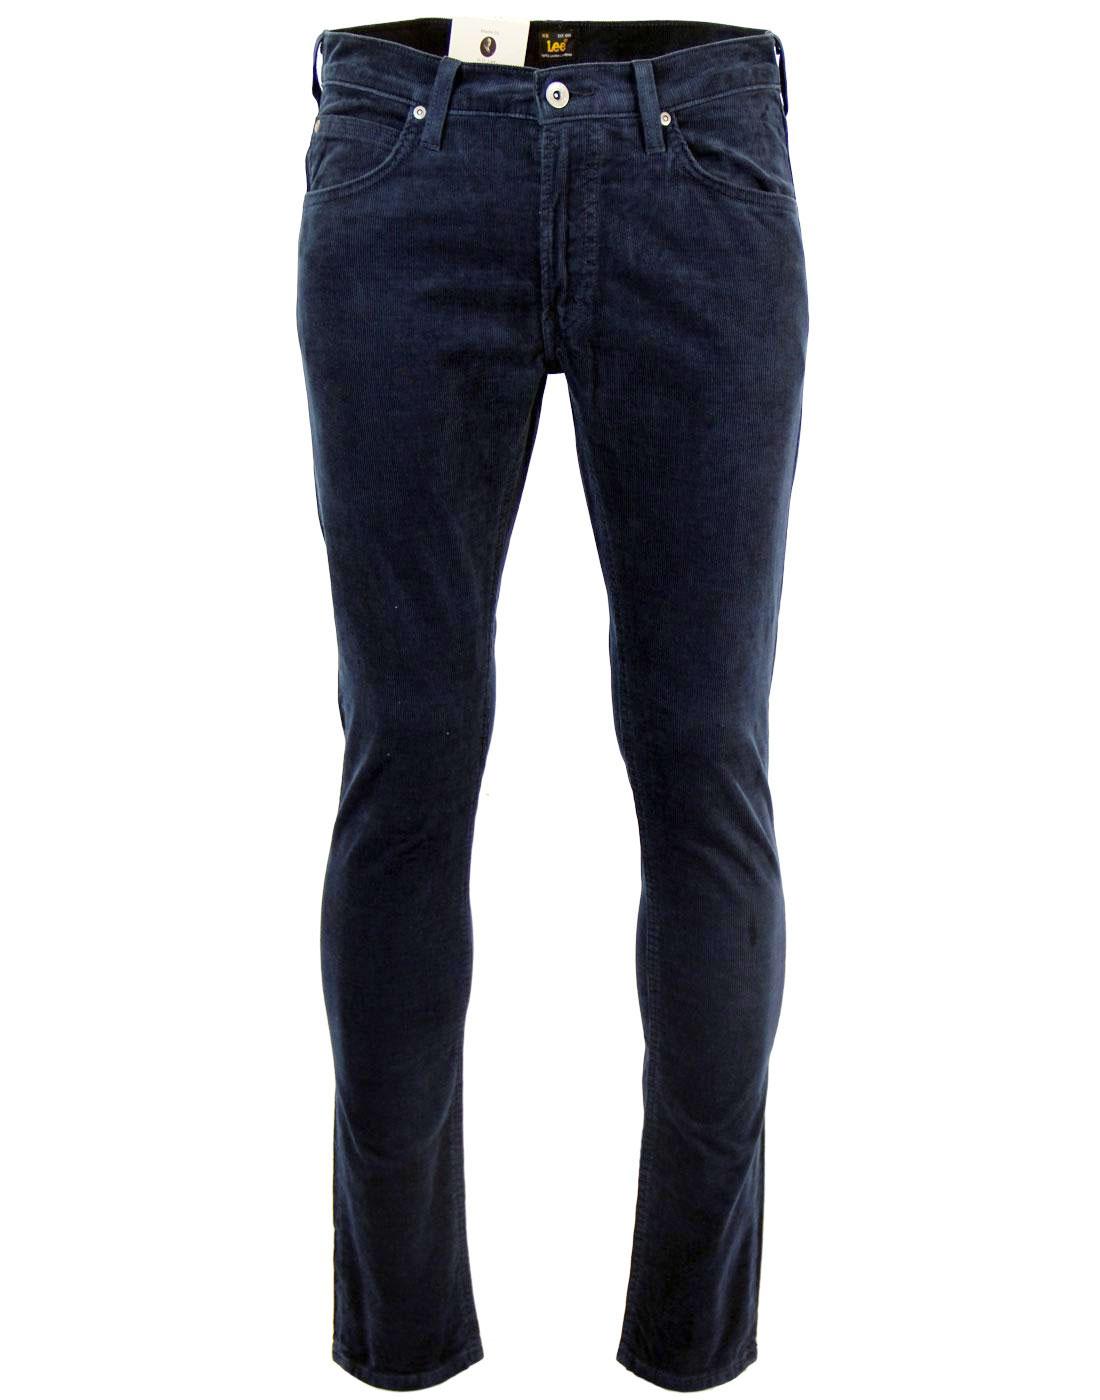 LEE JEANS Luke Retro Indie Mod Slim Tapered Fit Cord Jeans Navy